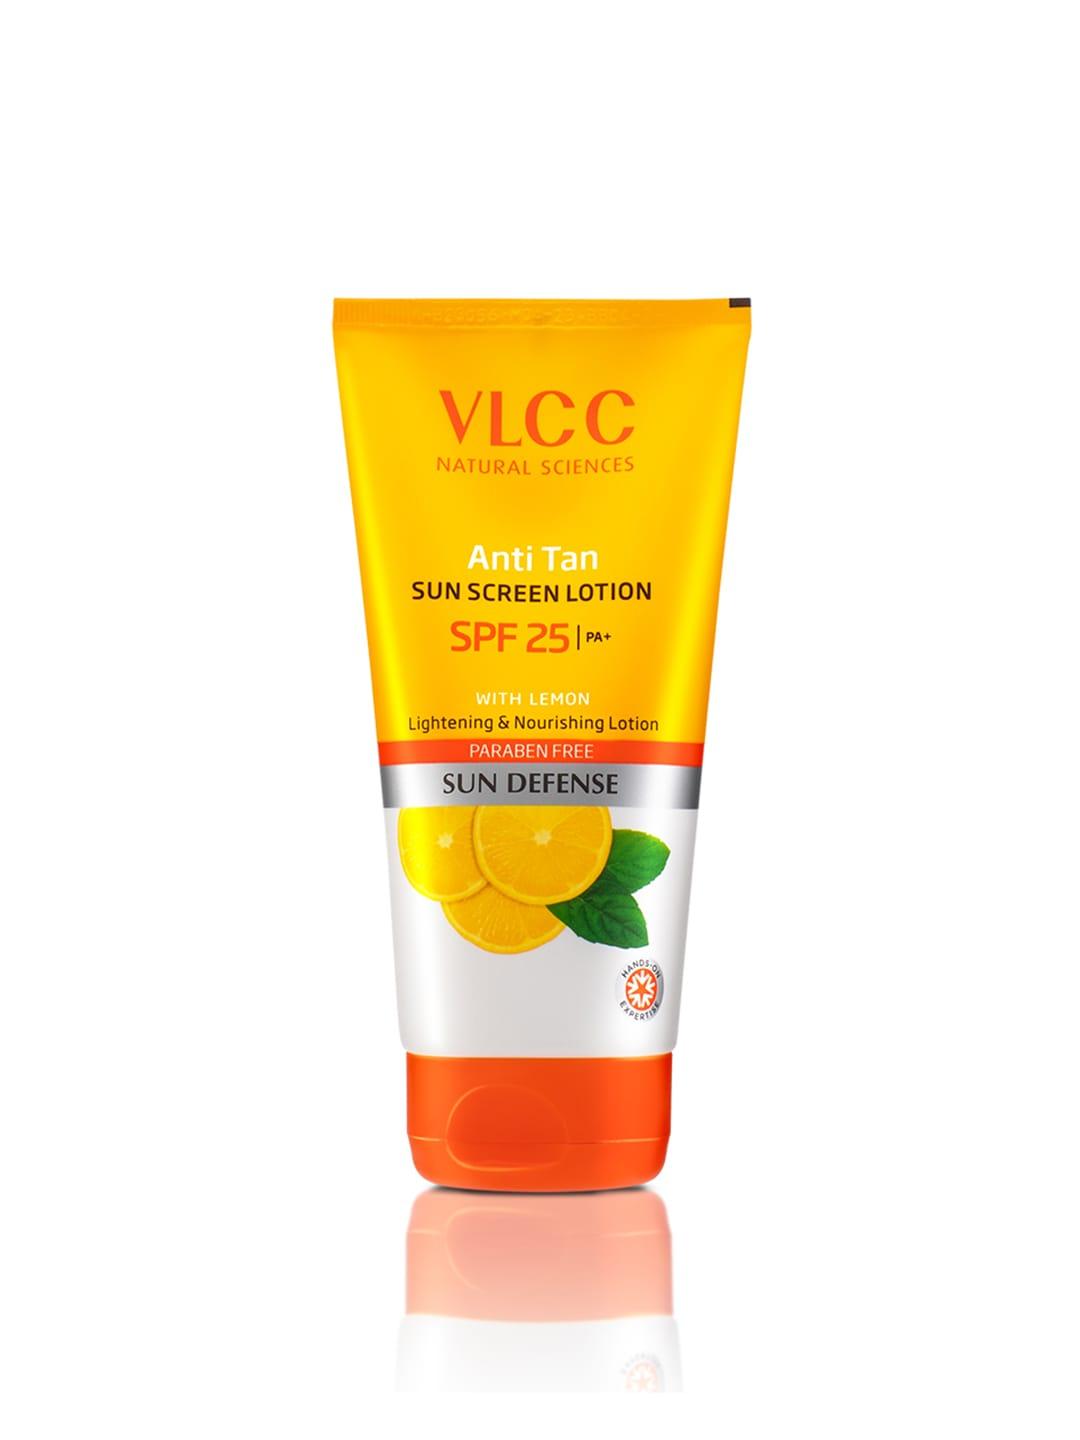 VLCC Anti-Tan Sunscreen Lotions with SPF 25PA+ & Lemon - Buy 1 Get 1 Free - 150ml each